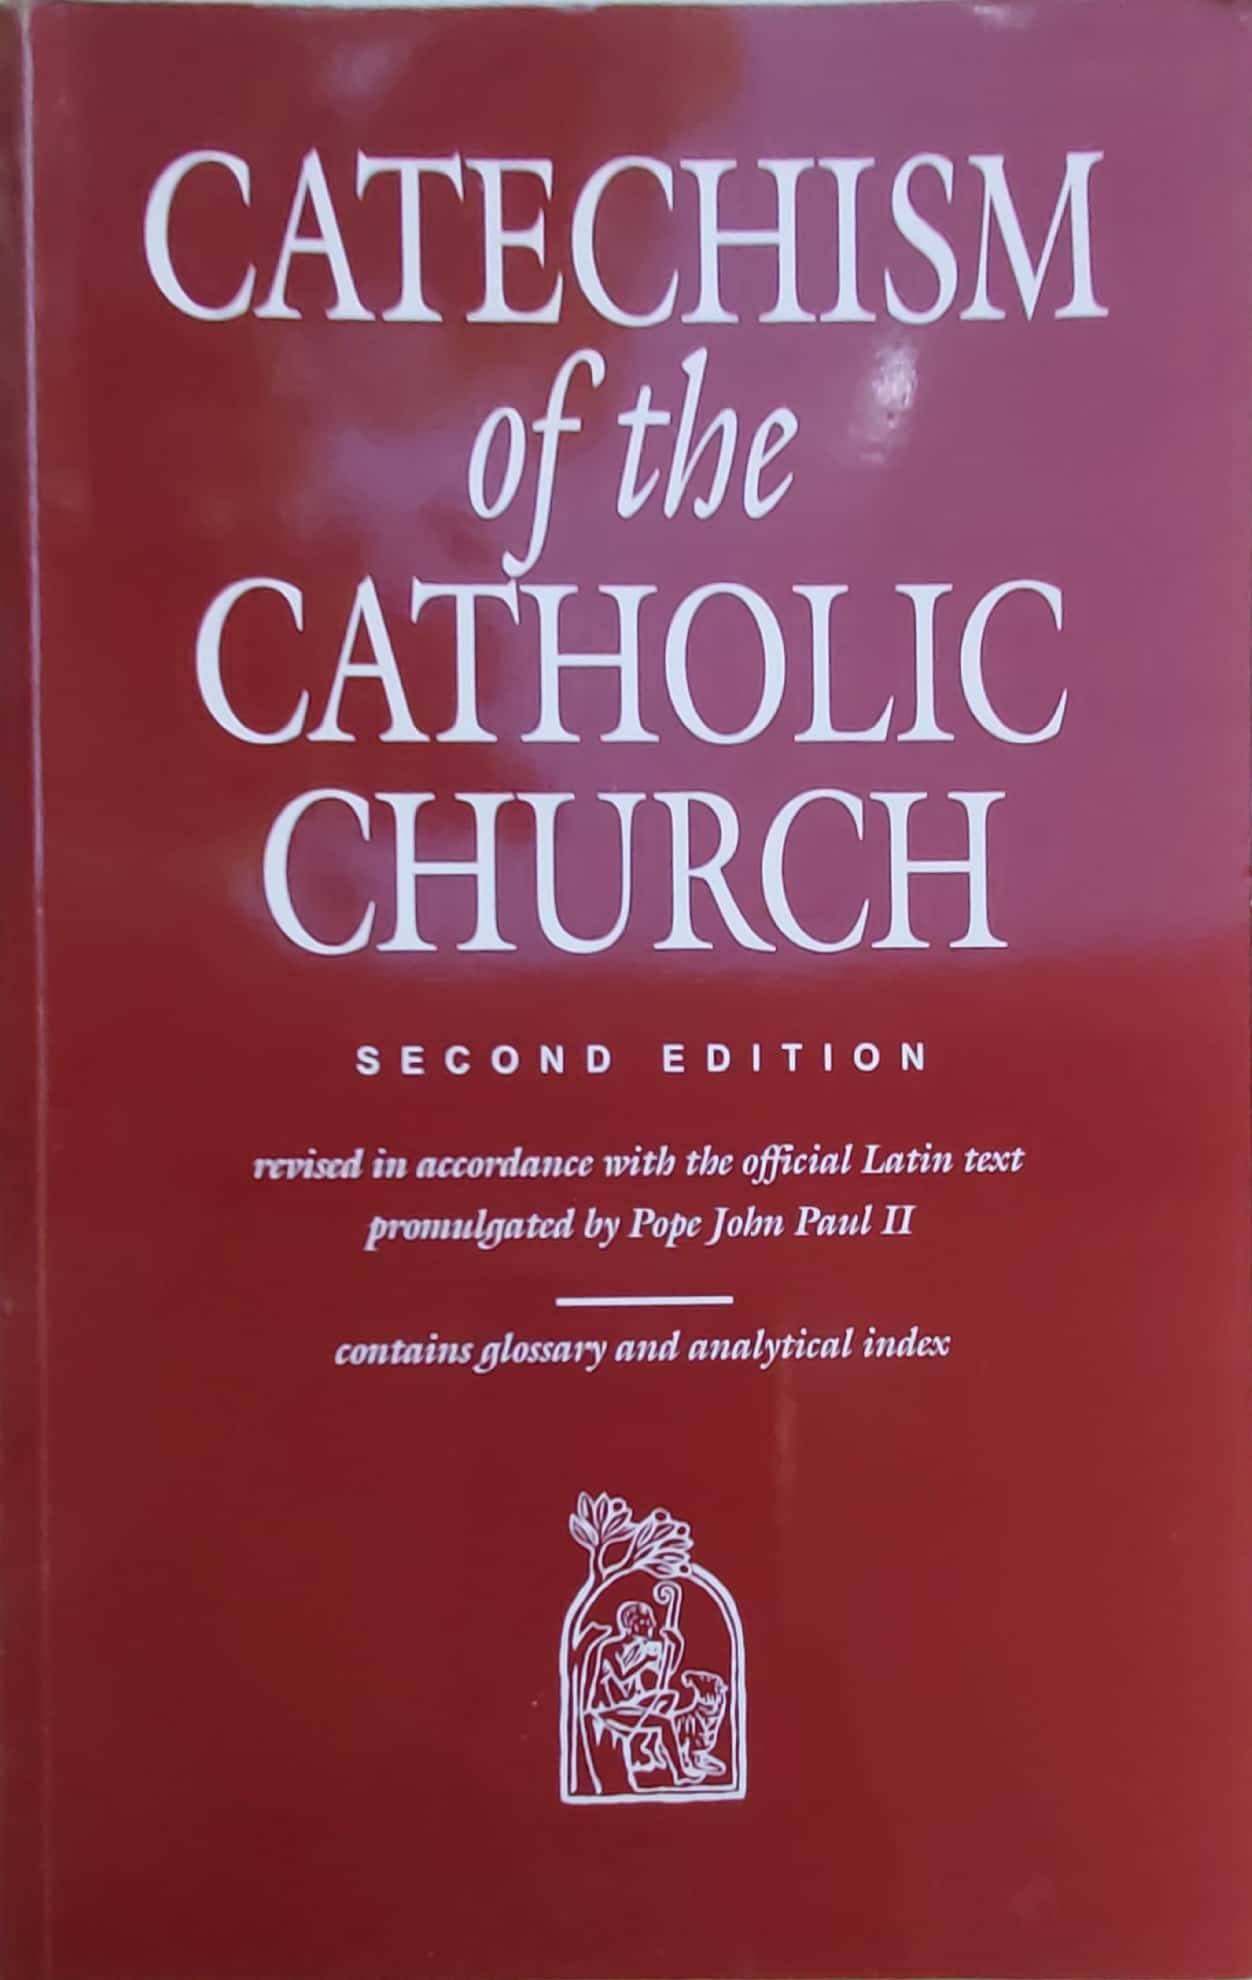 catechism-of-the-catholic-church-pb-joy-of-gifting